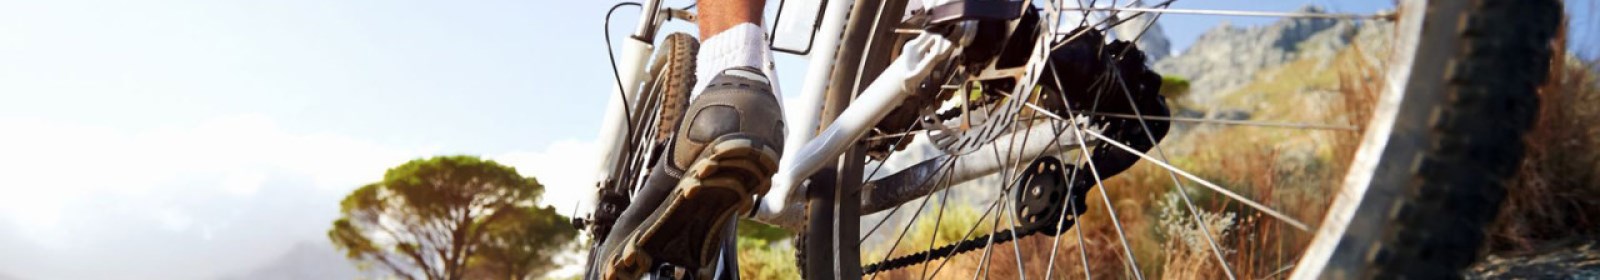 Tour SA’s most cycle-friendly neighbourhoods